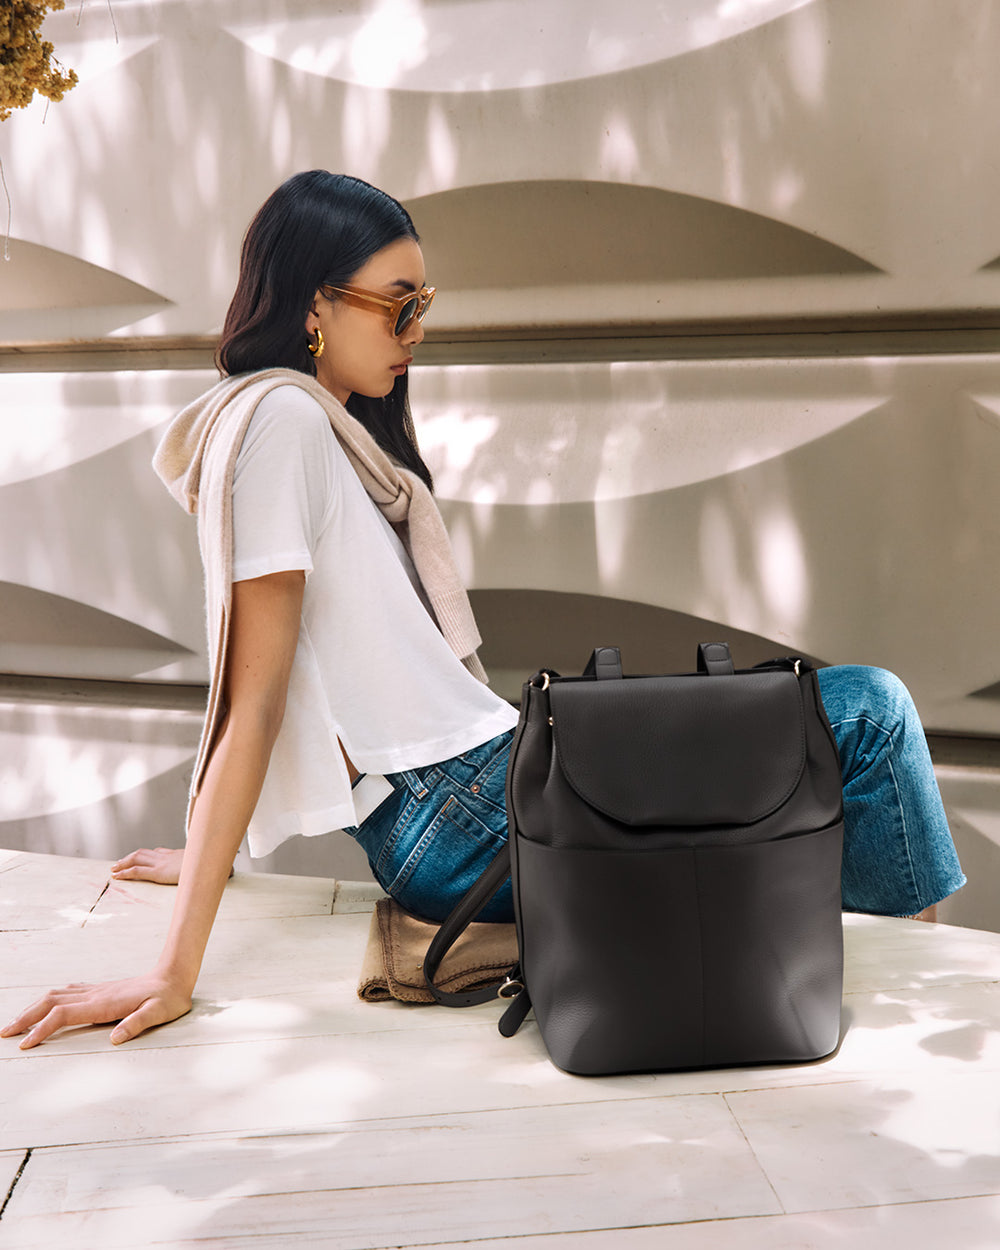 Designer Leather Backpacks - Large, Medium & Small